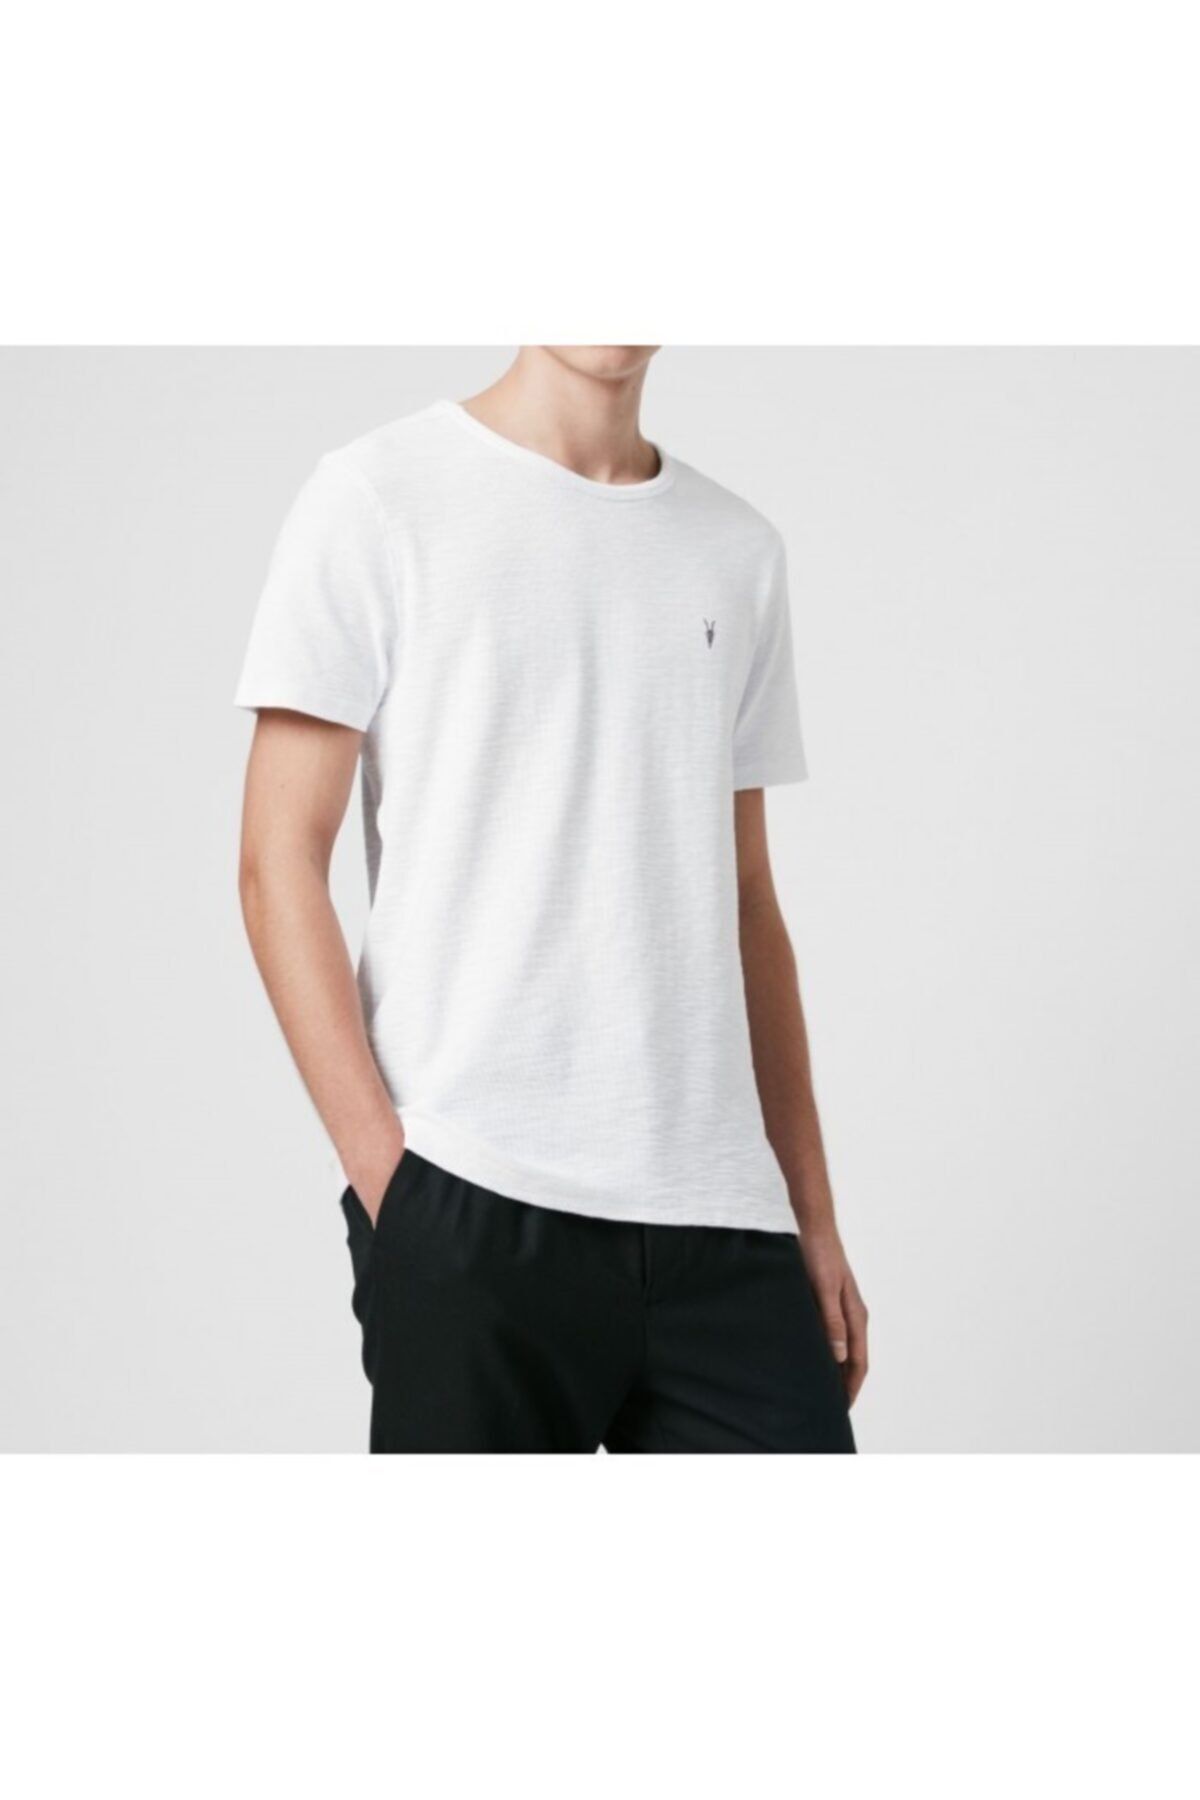 AllSaints Erkek Beyaz Kısa Kollu T-shirt